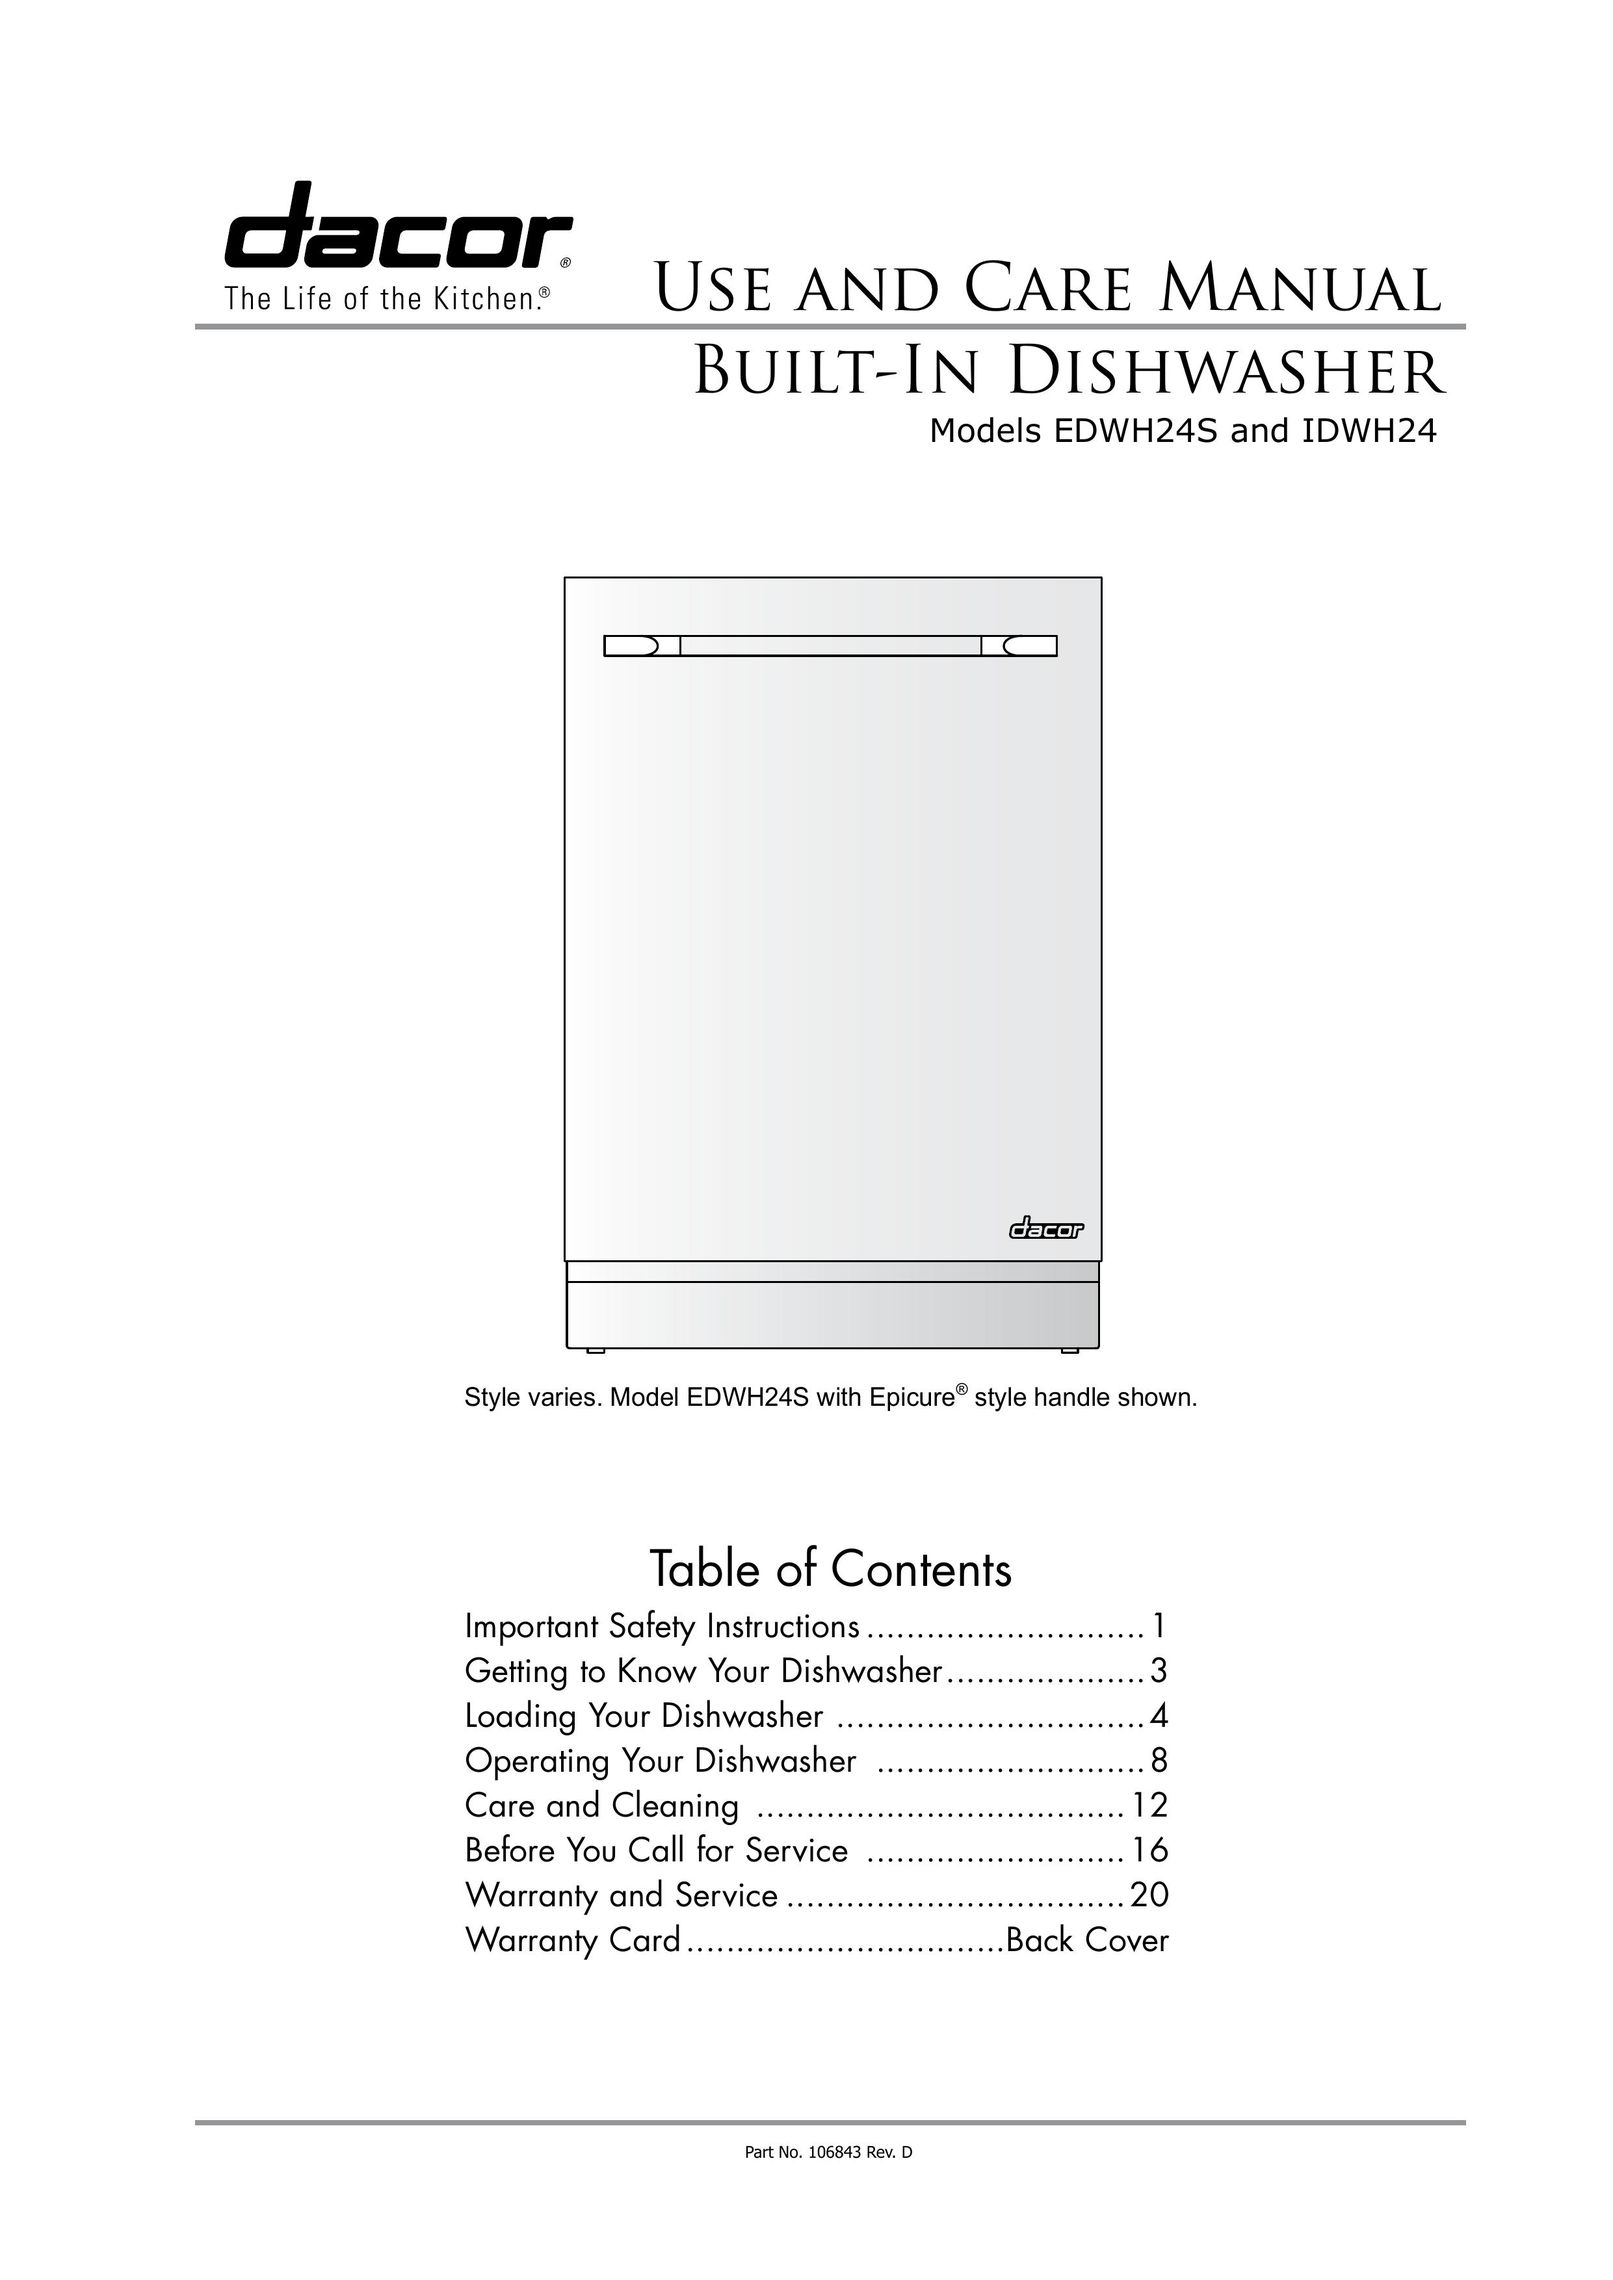 Dacor IDWH24 Dishwasher User Manual